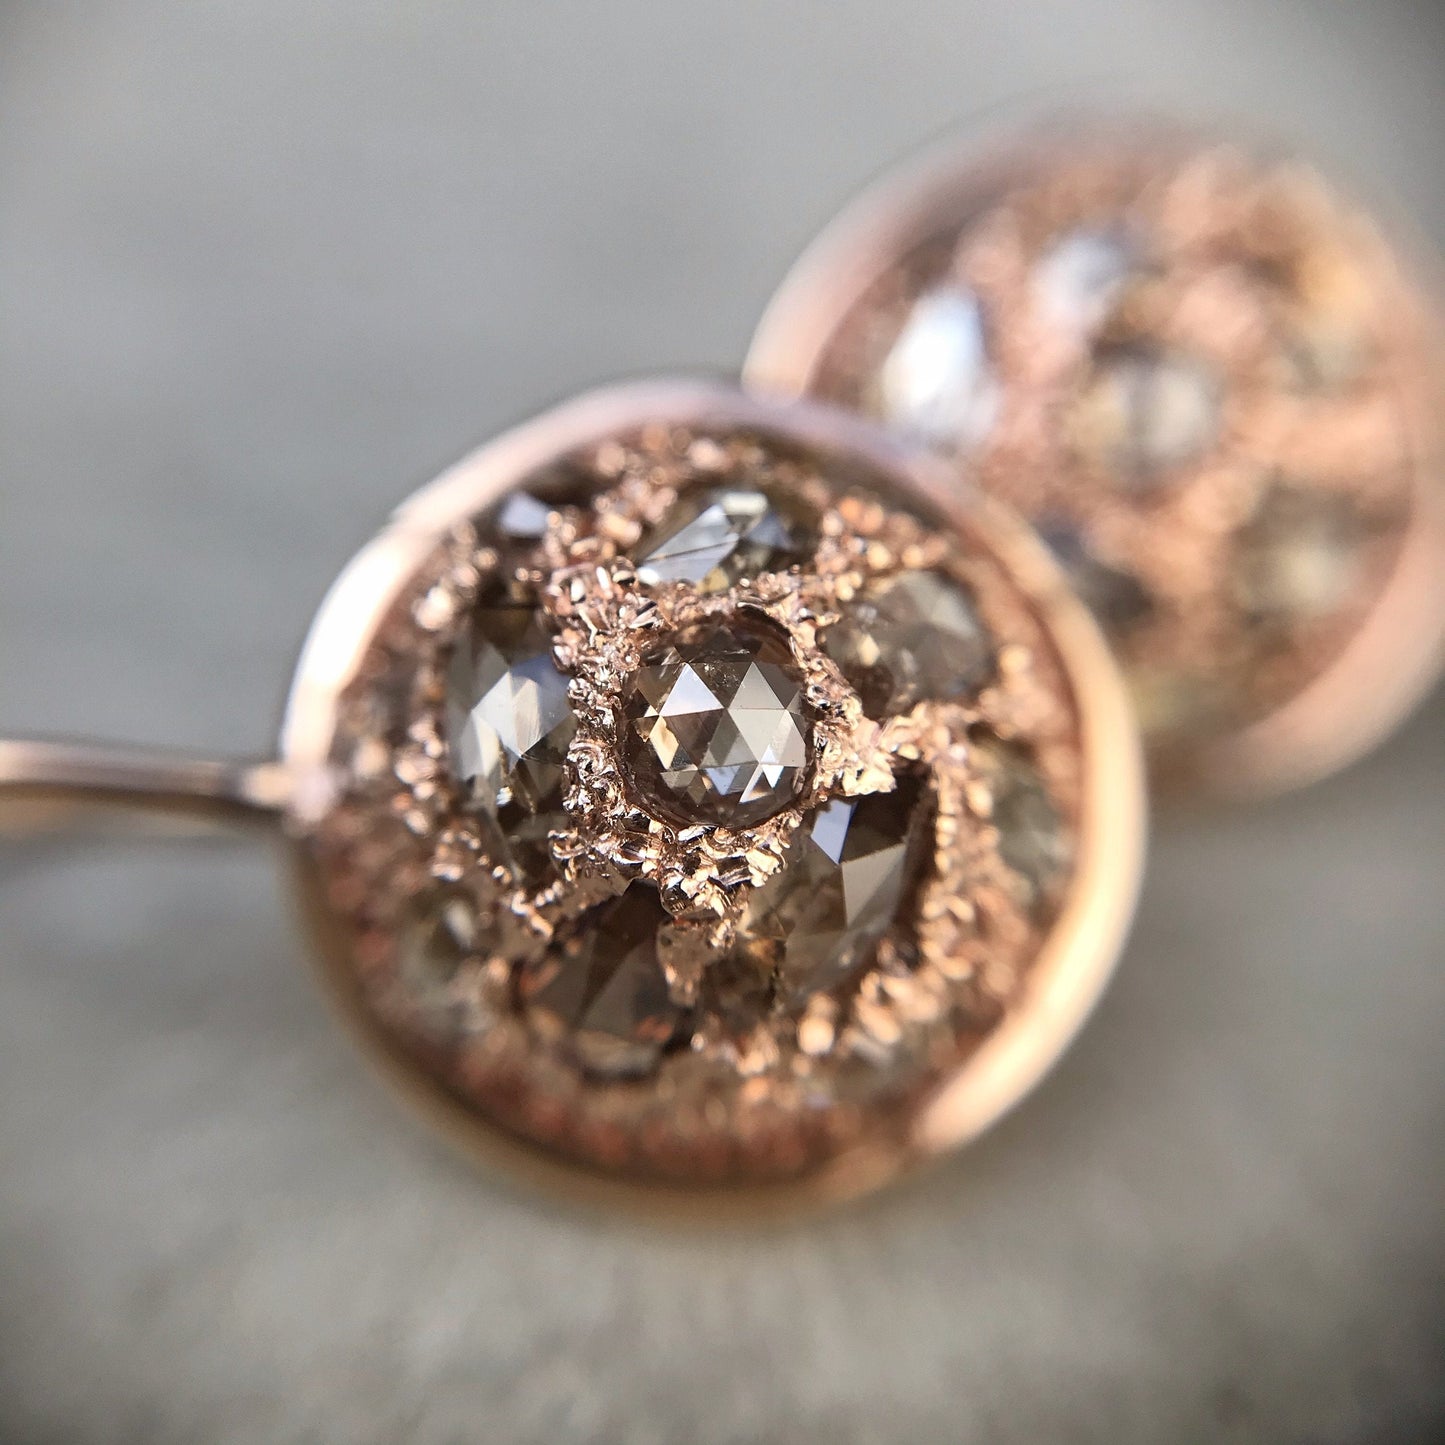 Diamond Duomo Rose Gold Earring-earrings-NIXIN-NIXIN